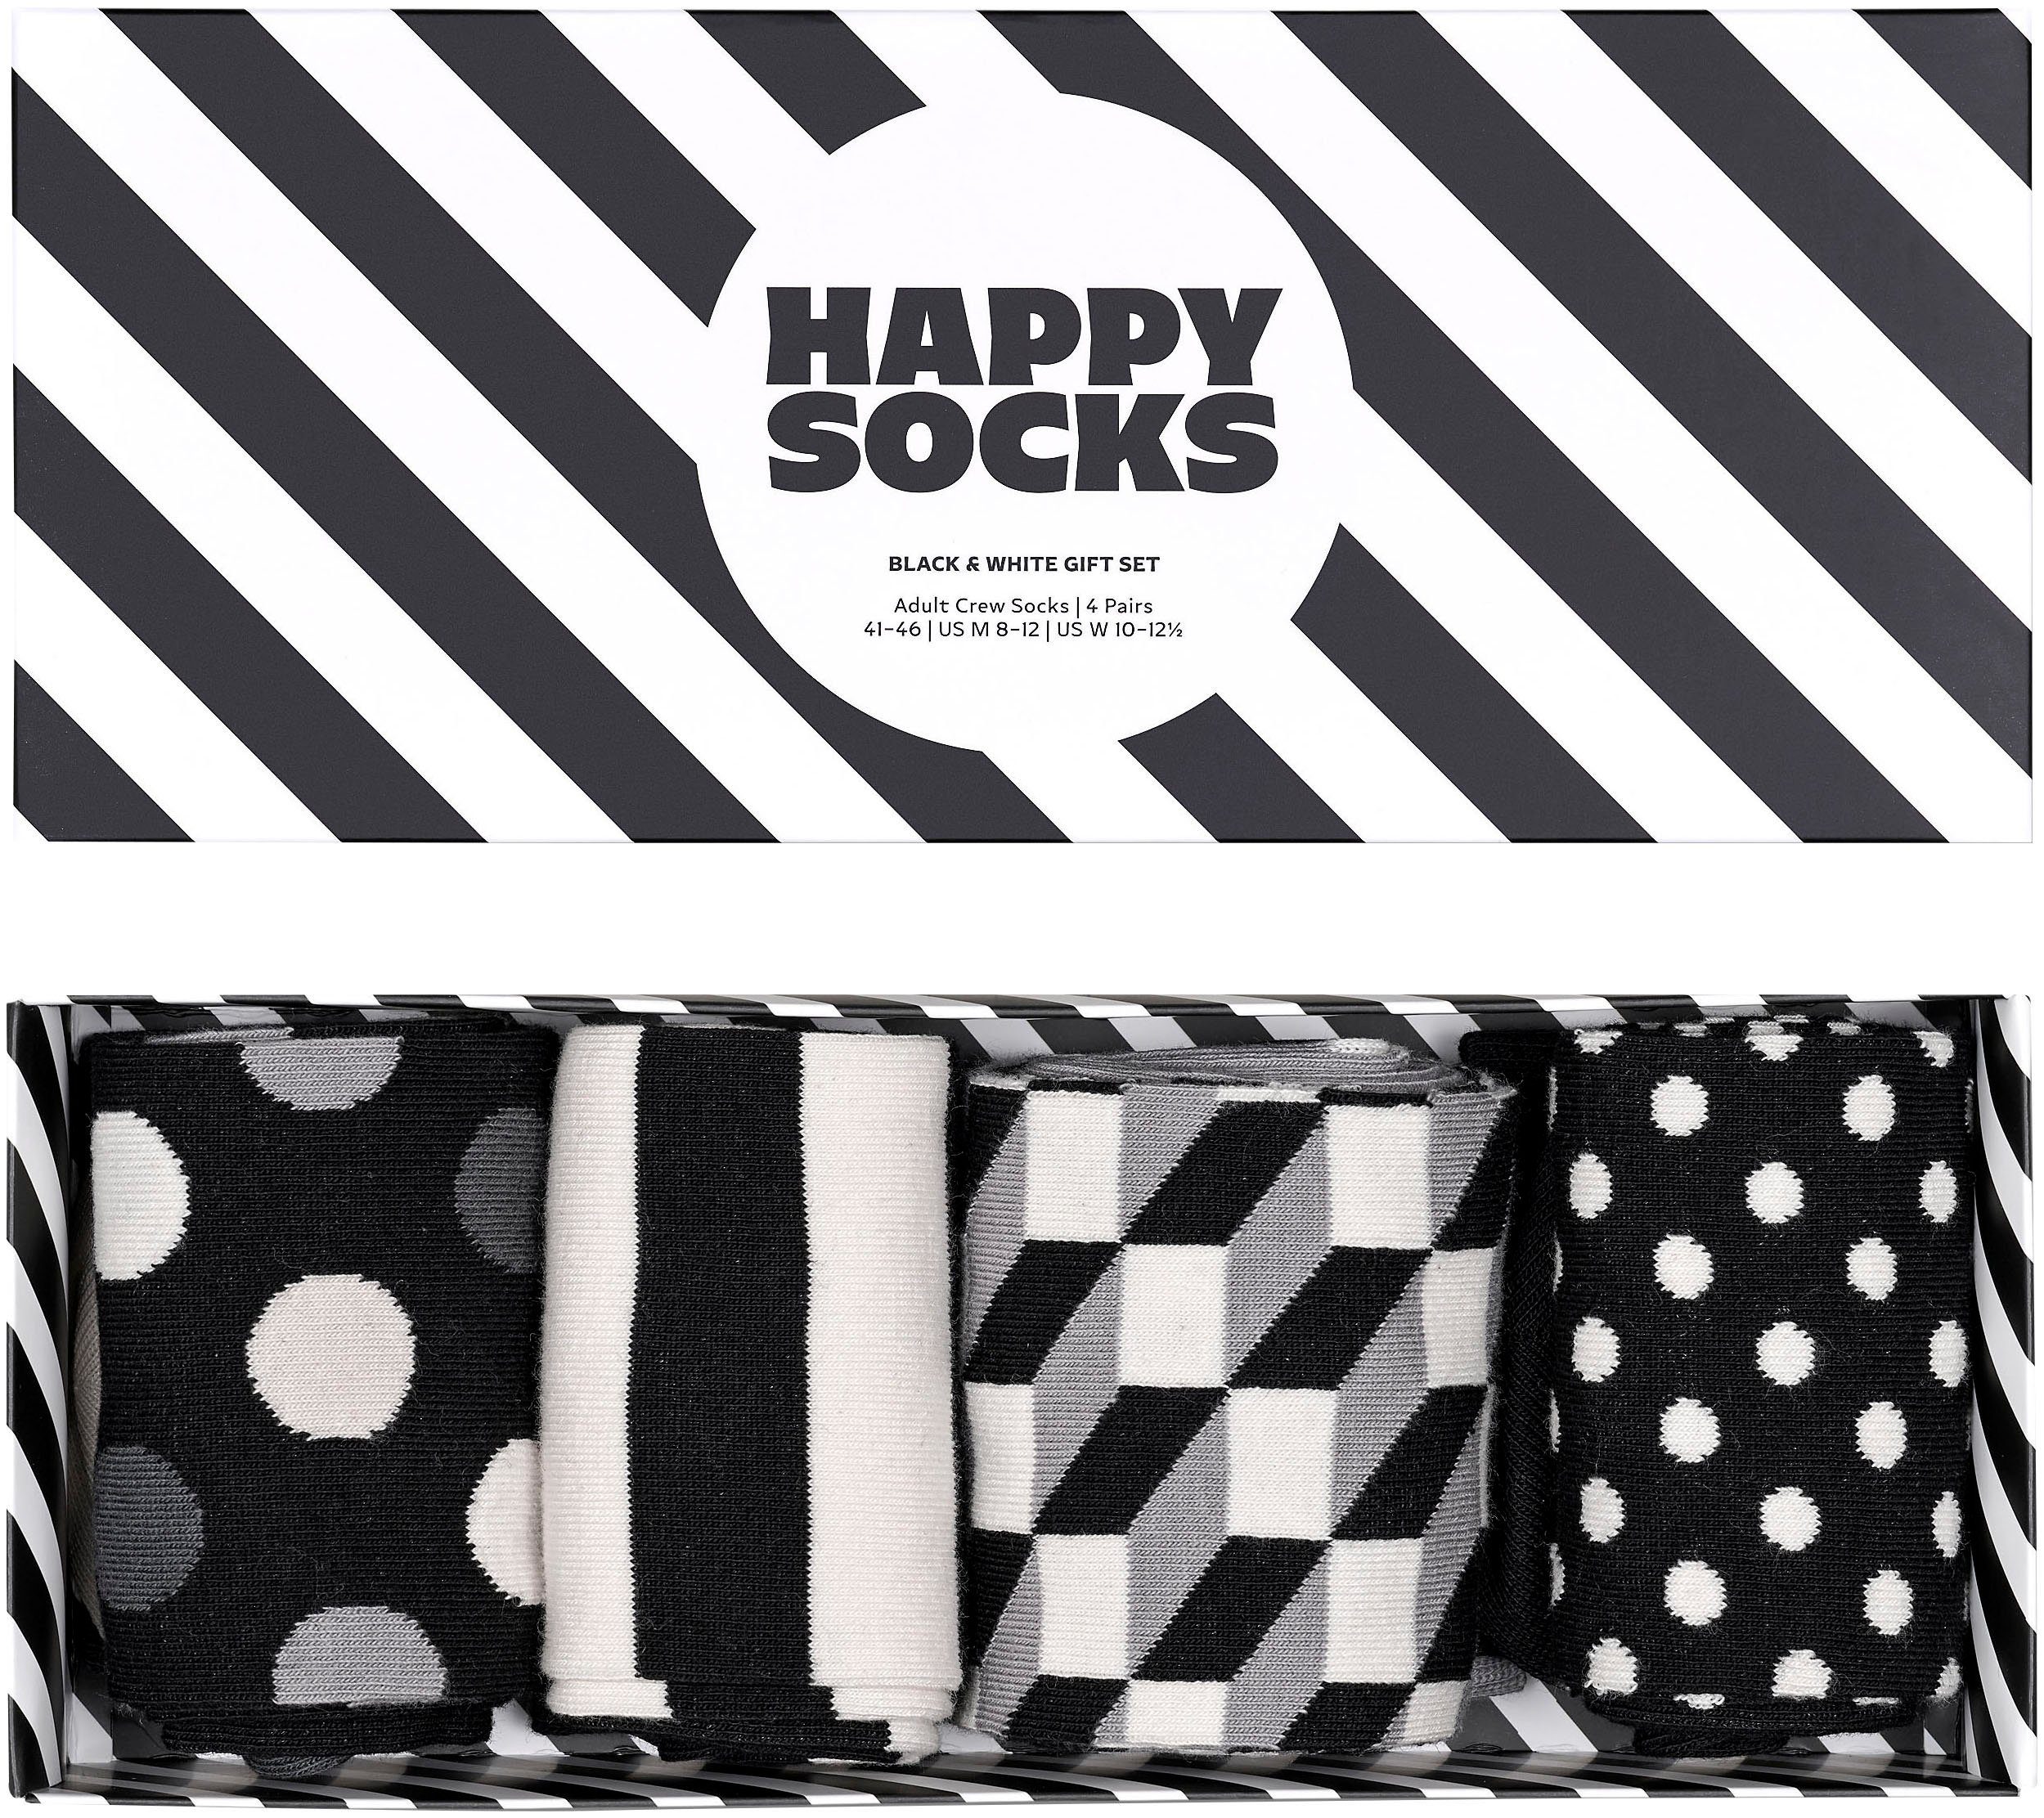 & (Packung, Socks Happy White Gift Classic Socks grey Socken Set Black 4-Paar) dark